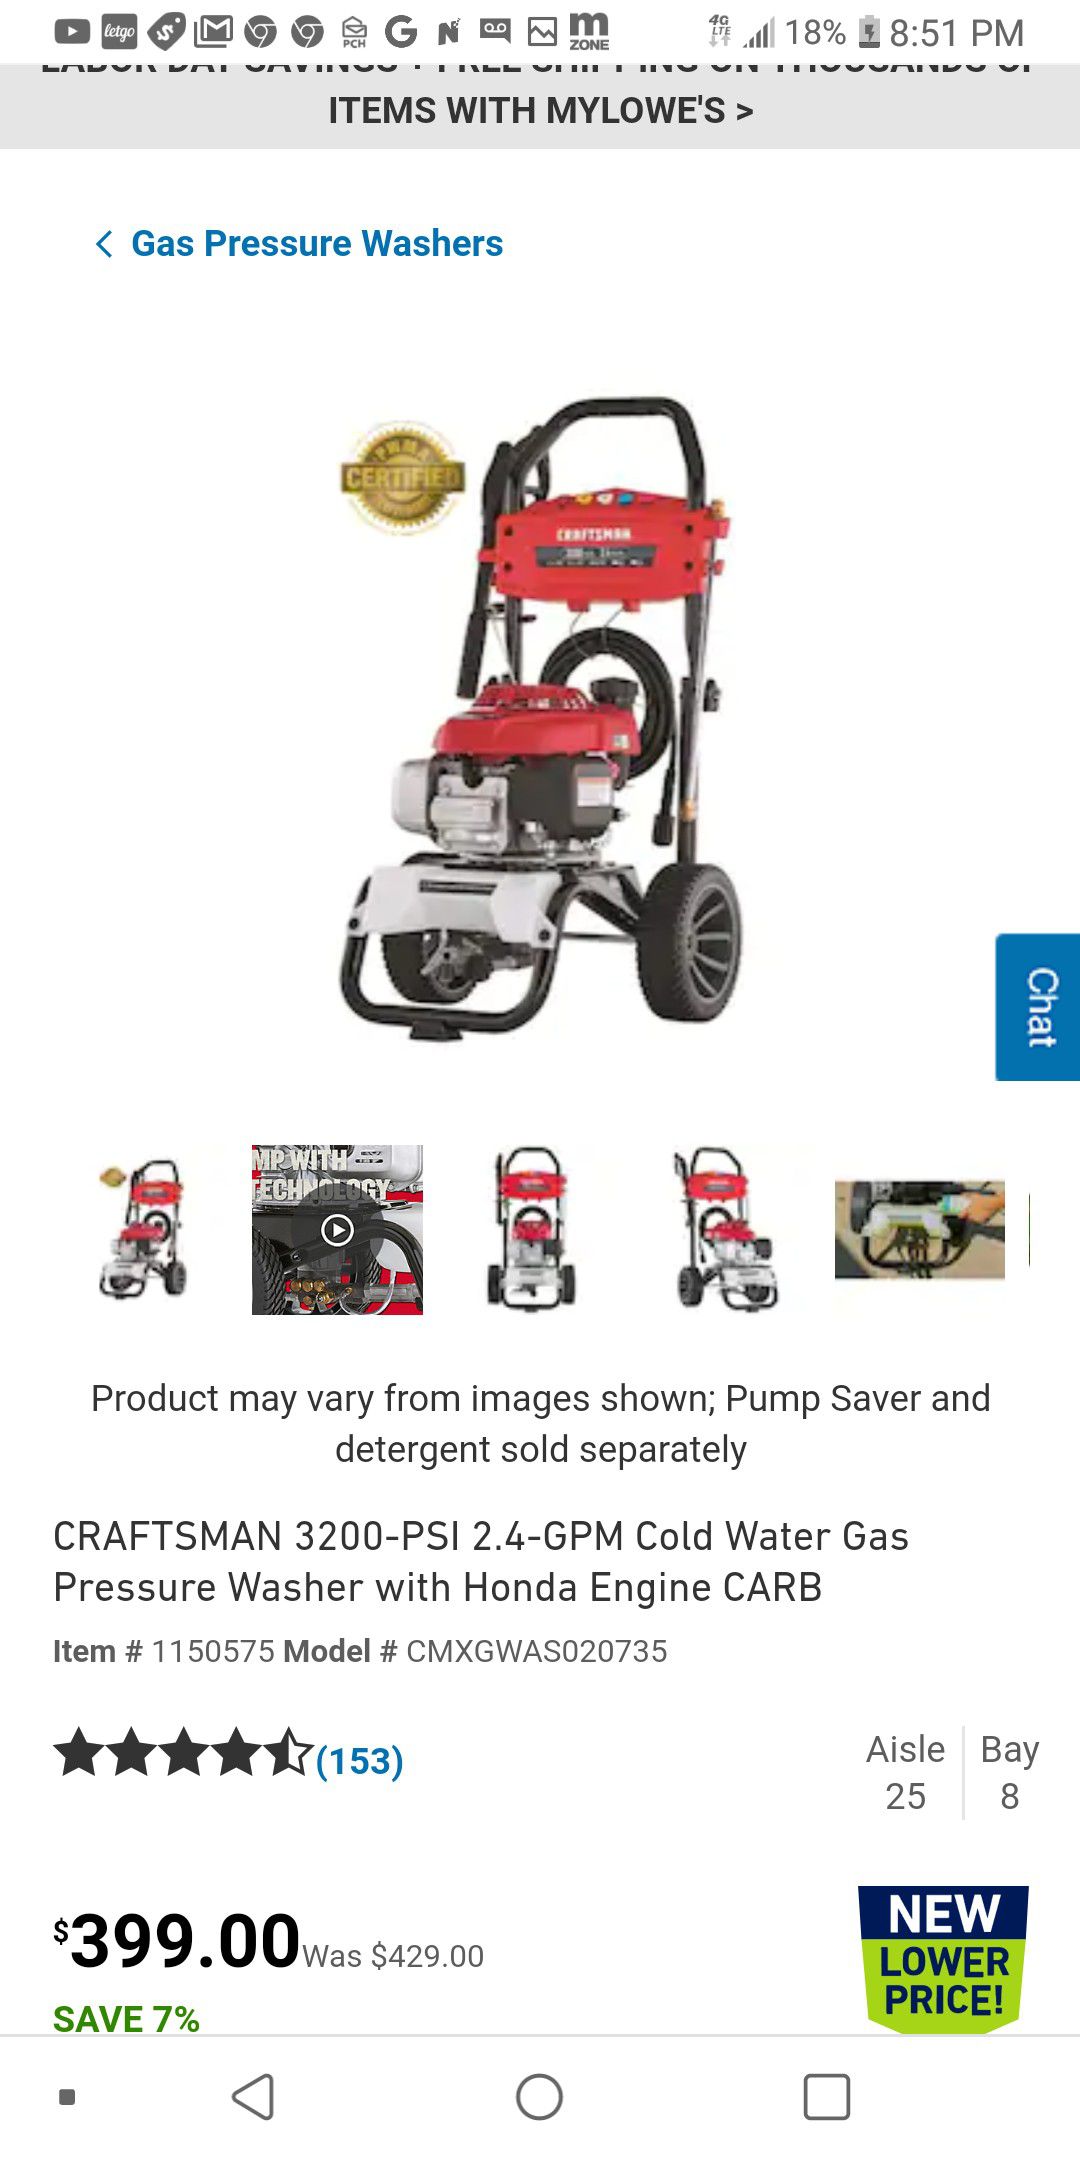 Brand new Craftman 3200 psi pressure washer